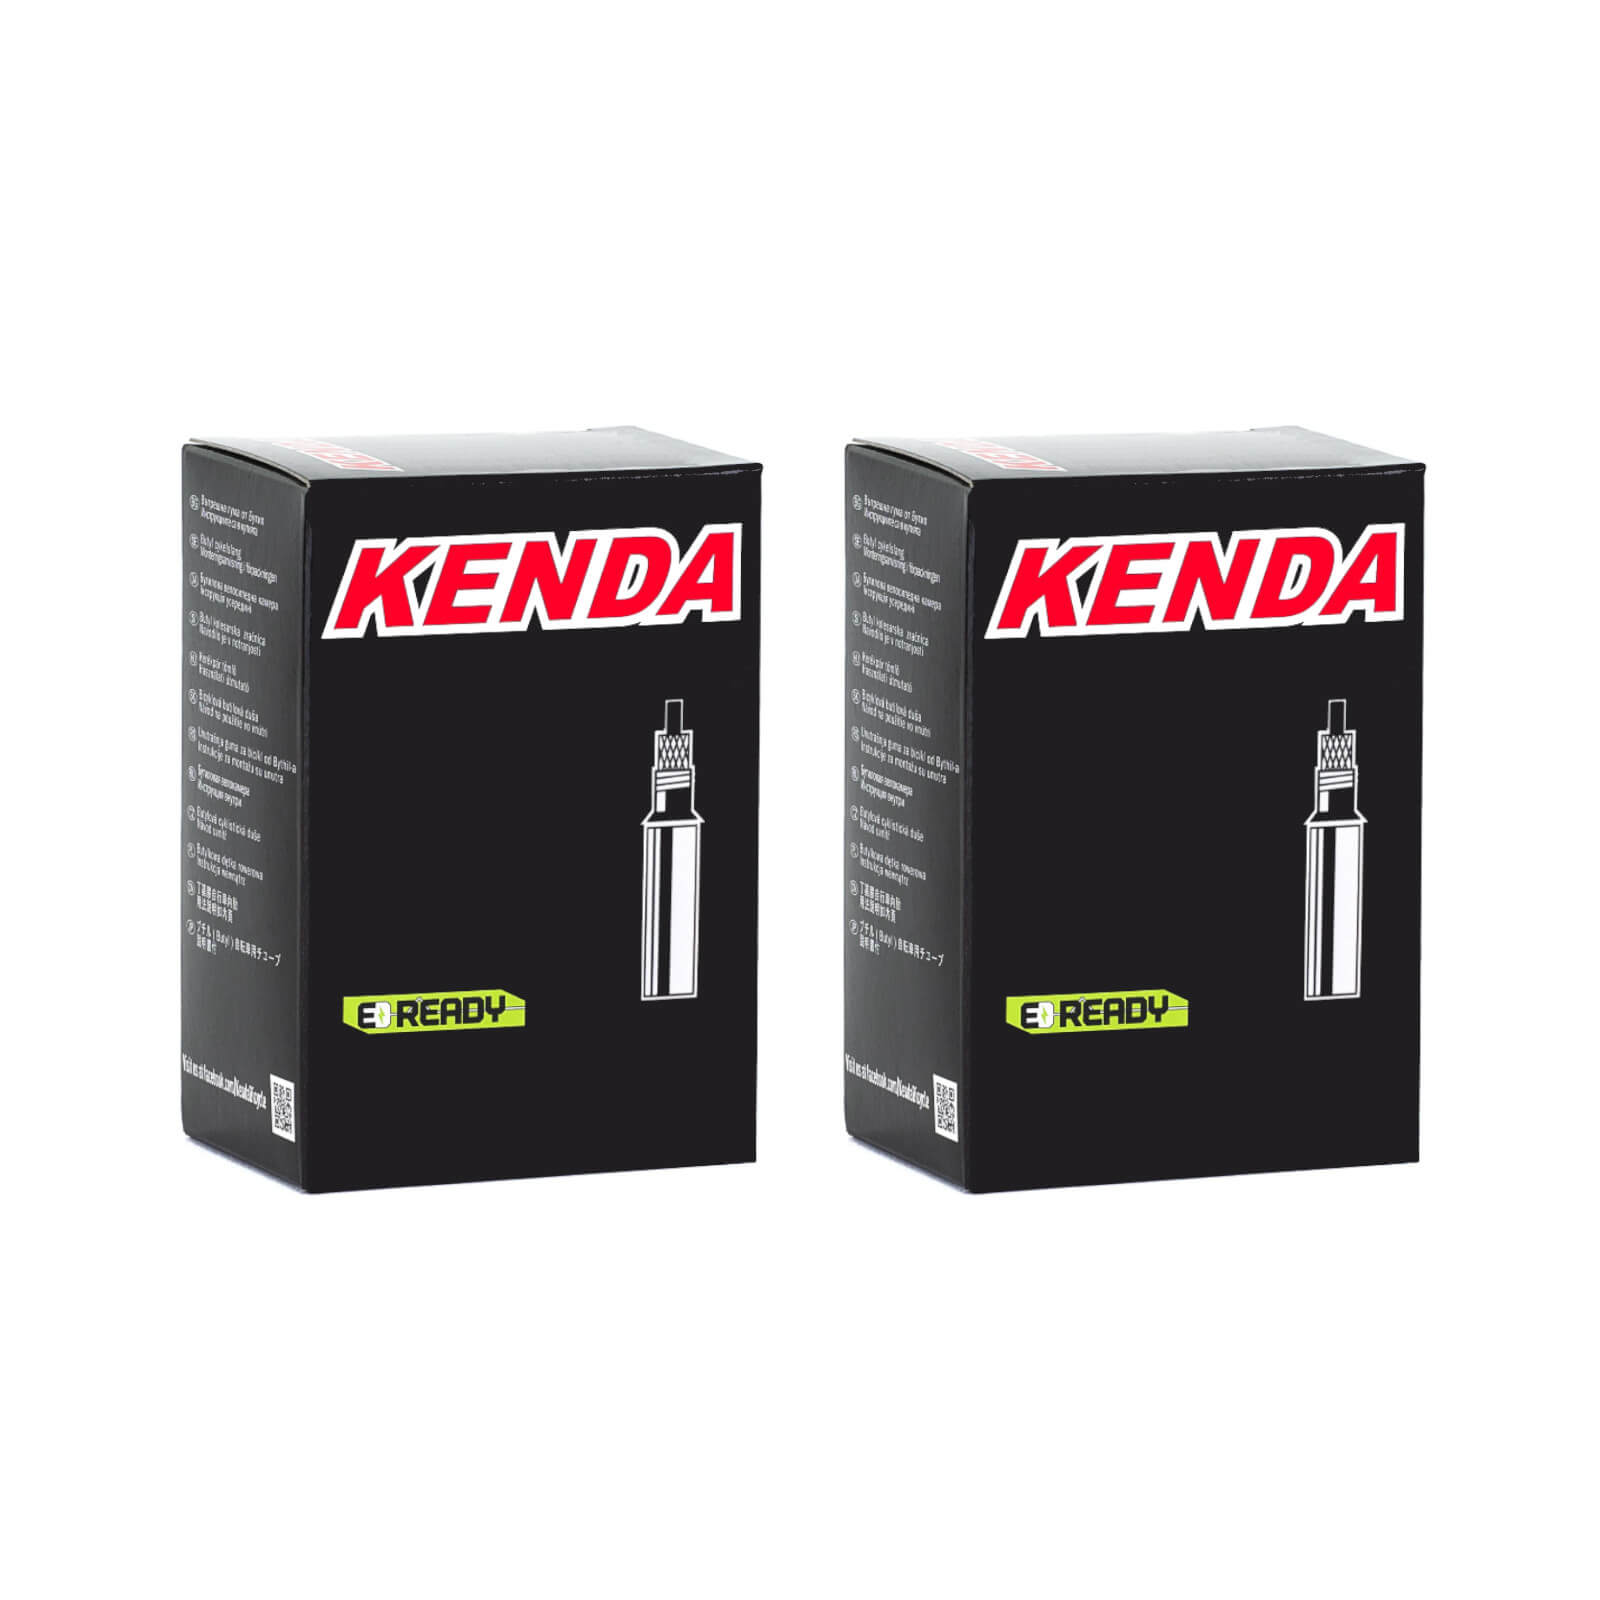 Kenda 27.5x1.25-1.5" 27.5 Inch Presta Valve Bike Inner Tube Pack of 2